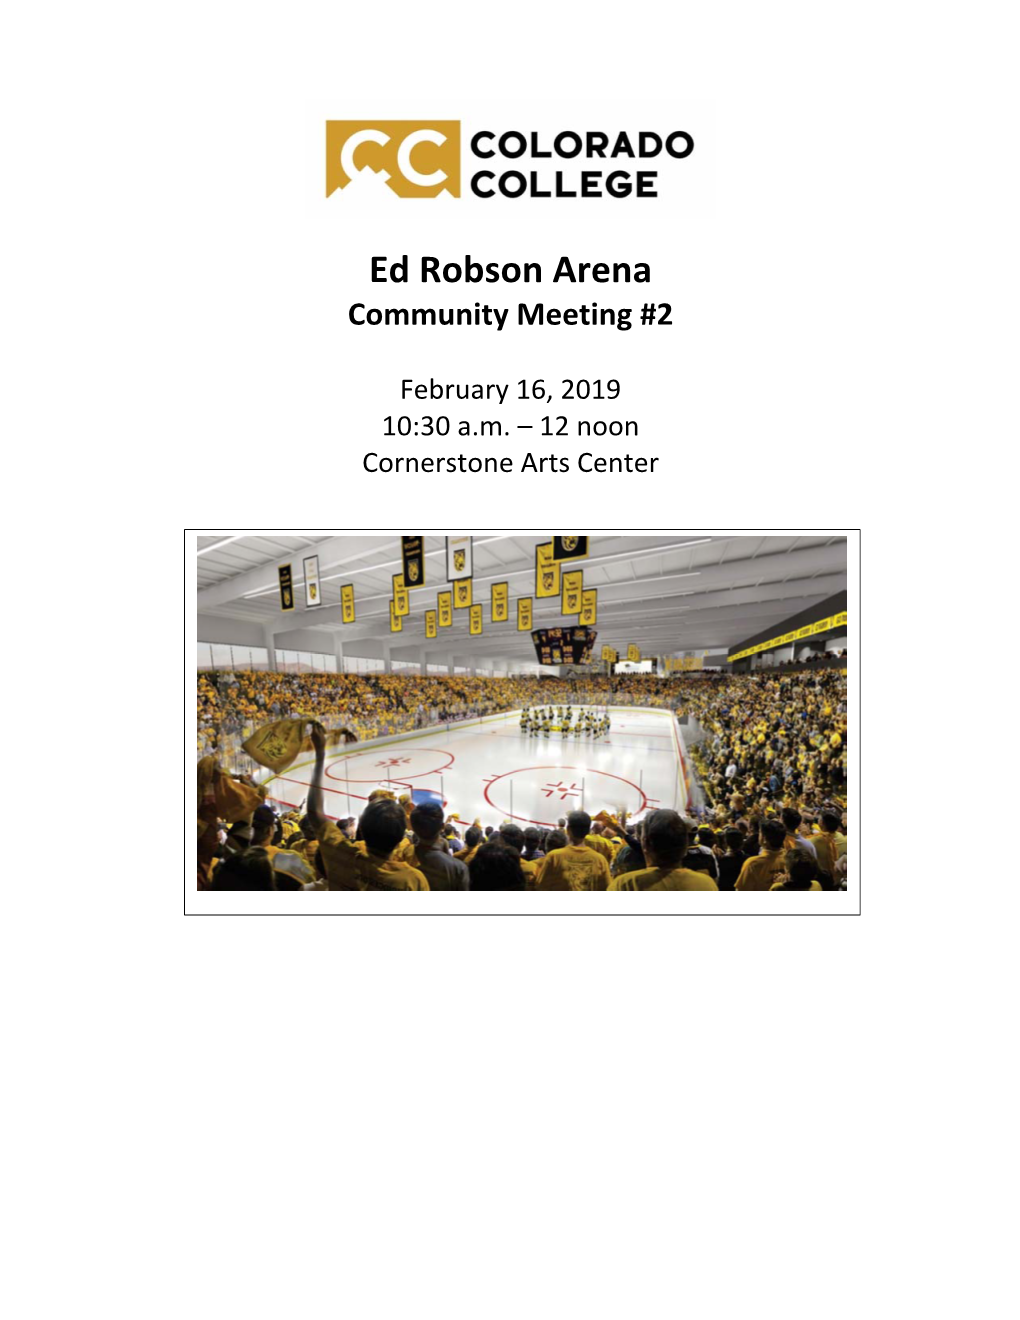 Ed Robson Arena Community Meeting #2